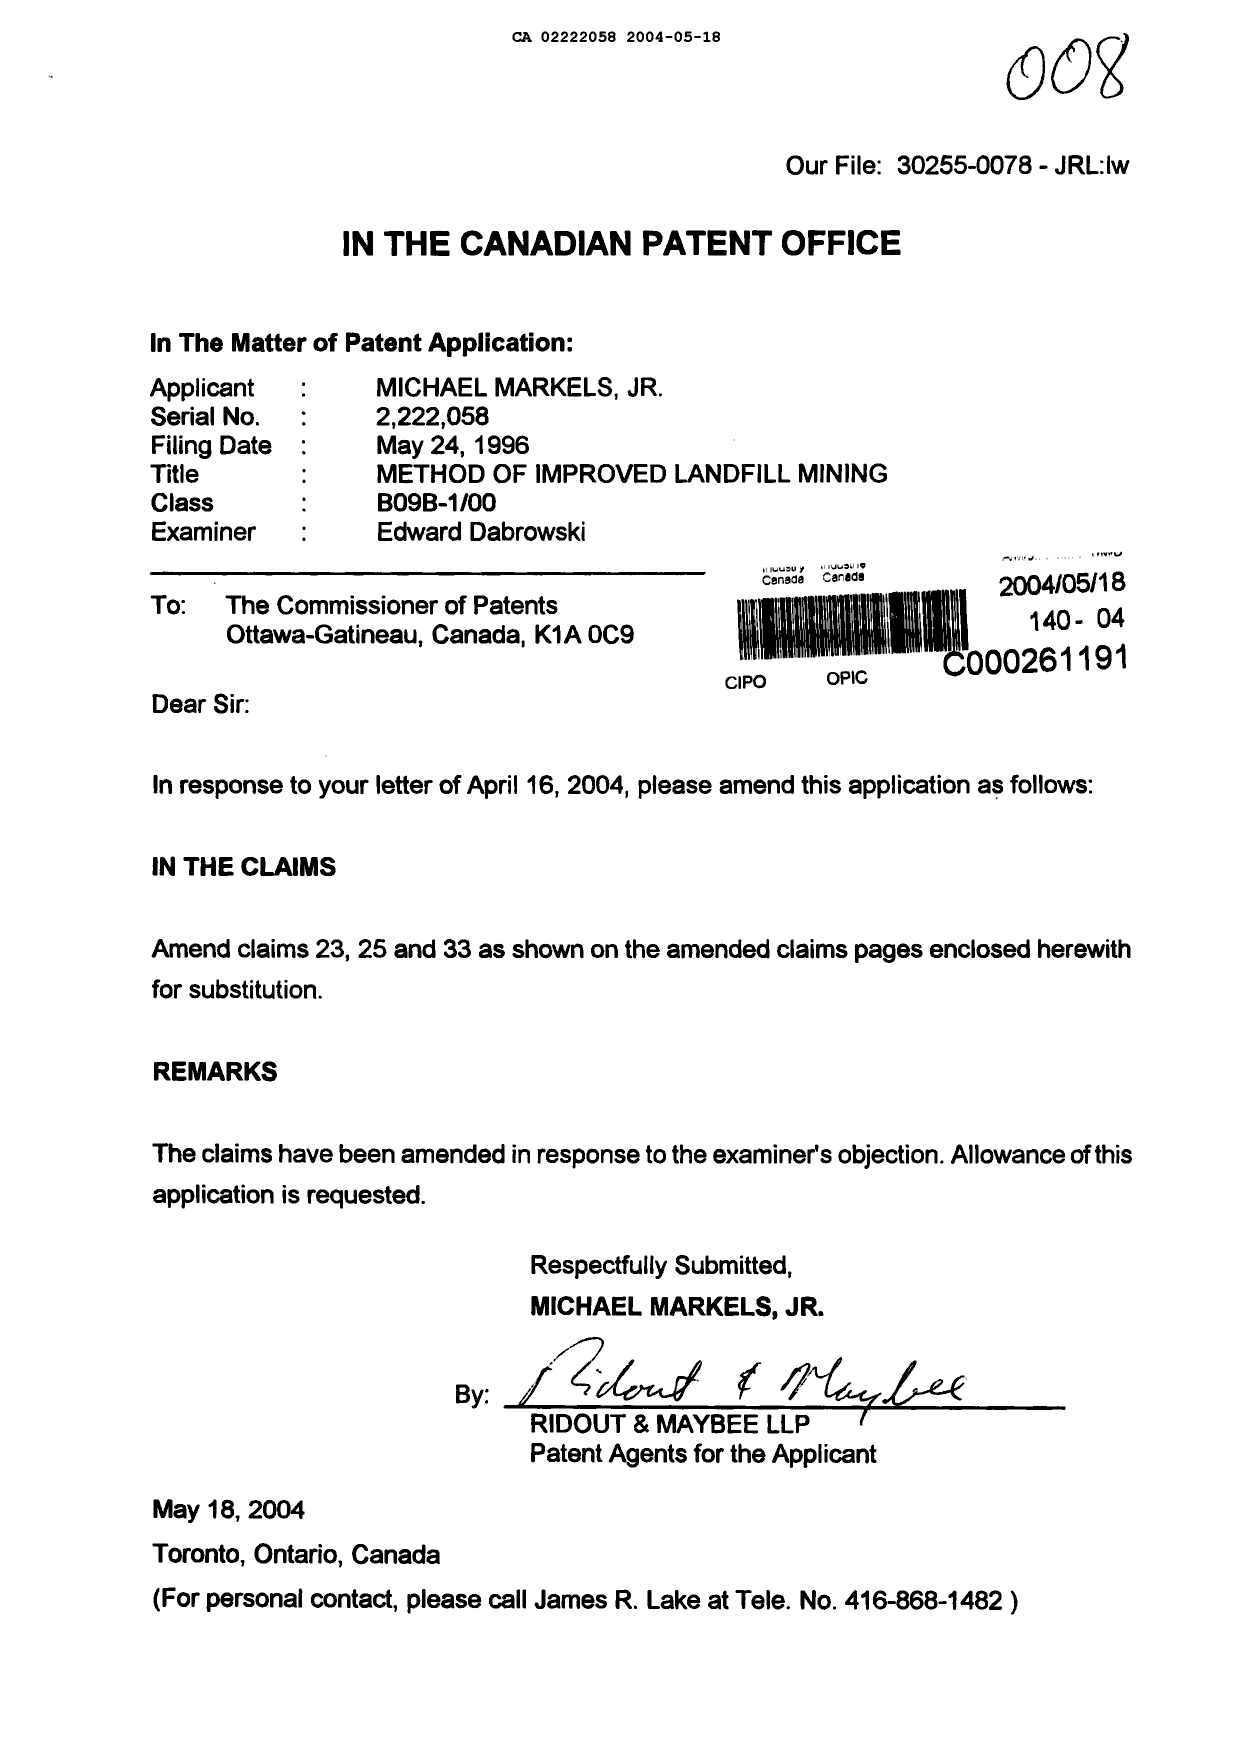 Canadian Patent Document 2222058. Prosecution-Amendment 20031218. Image 1 of 3